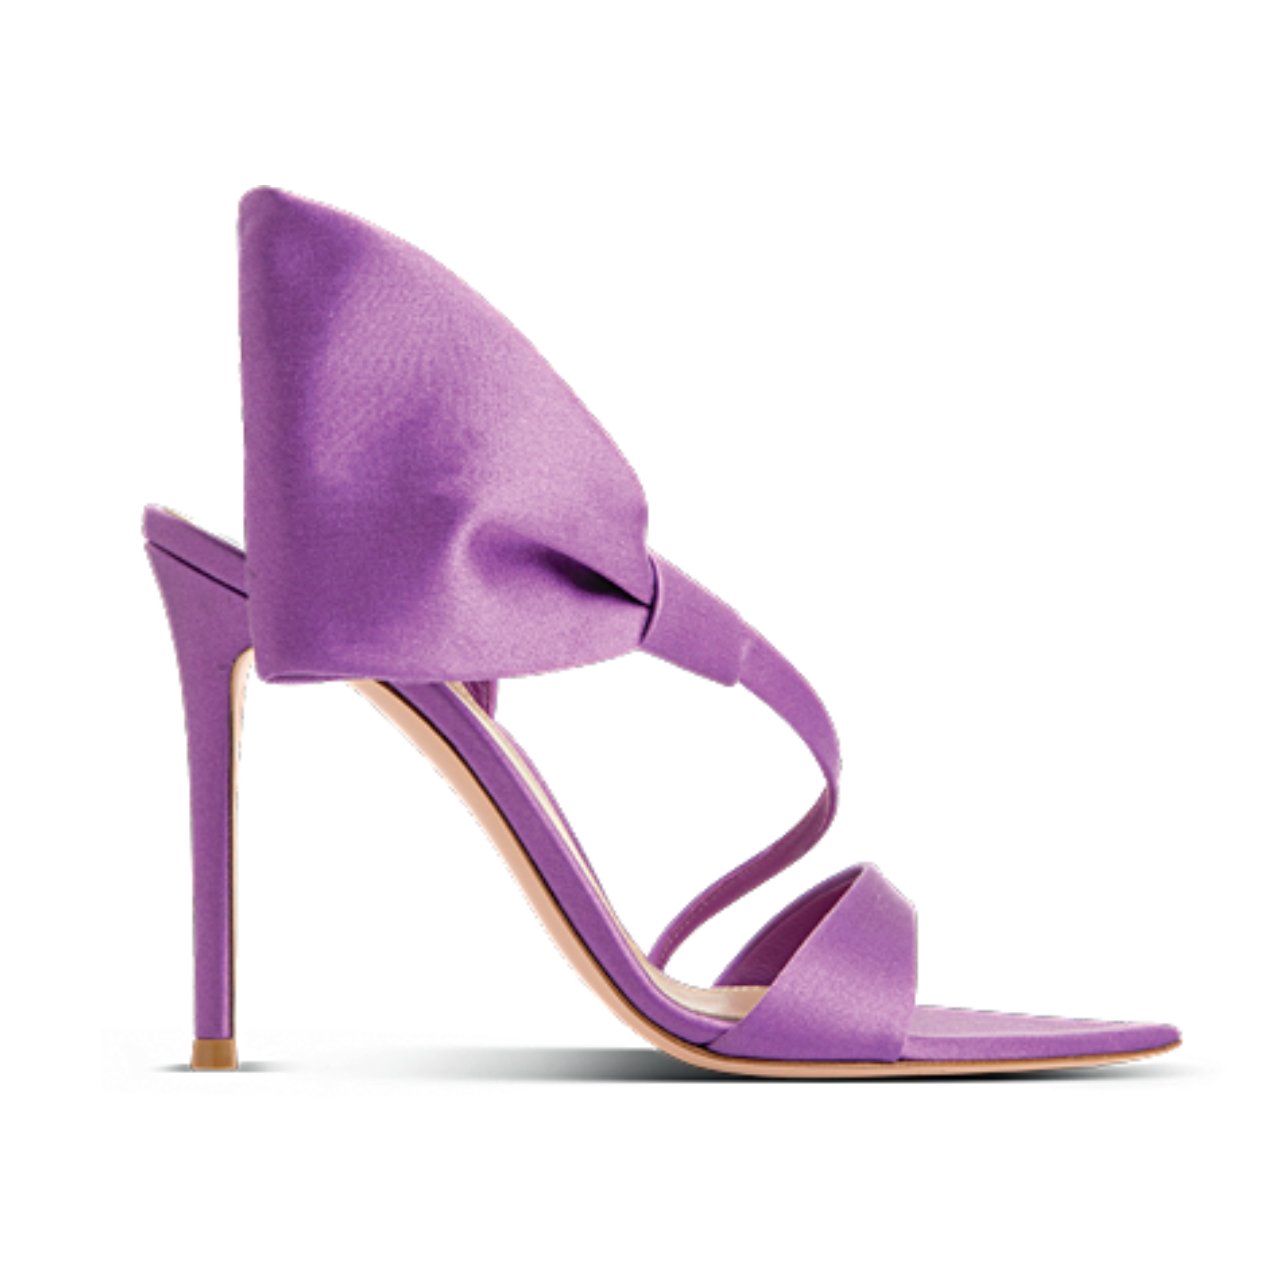 Gianvito Rossi purple satin sandals with heels